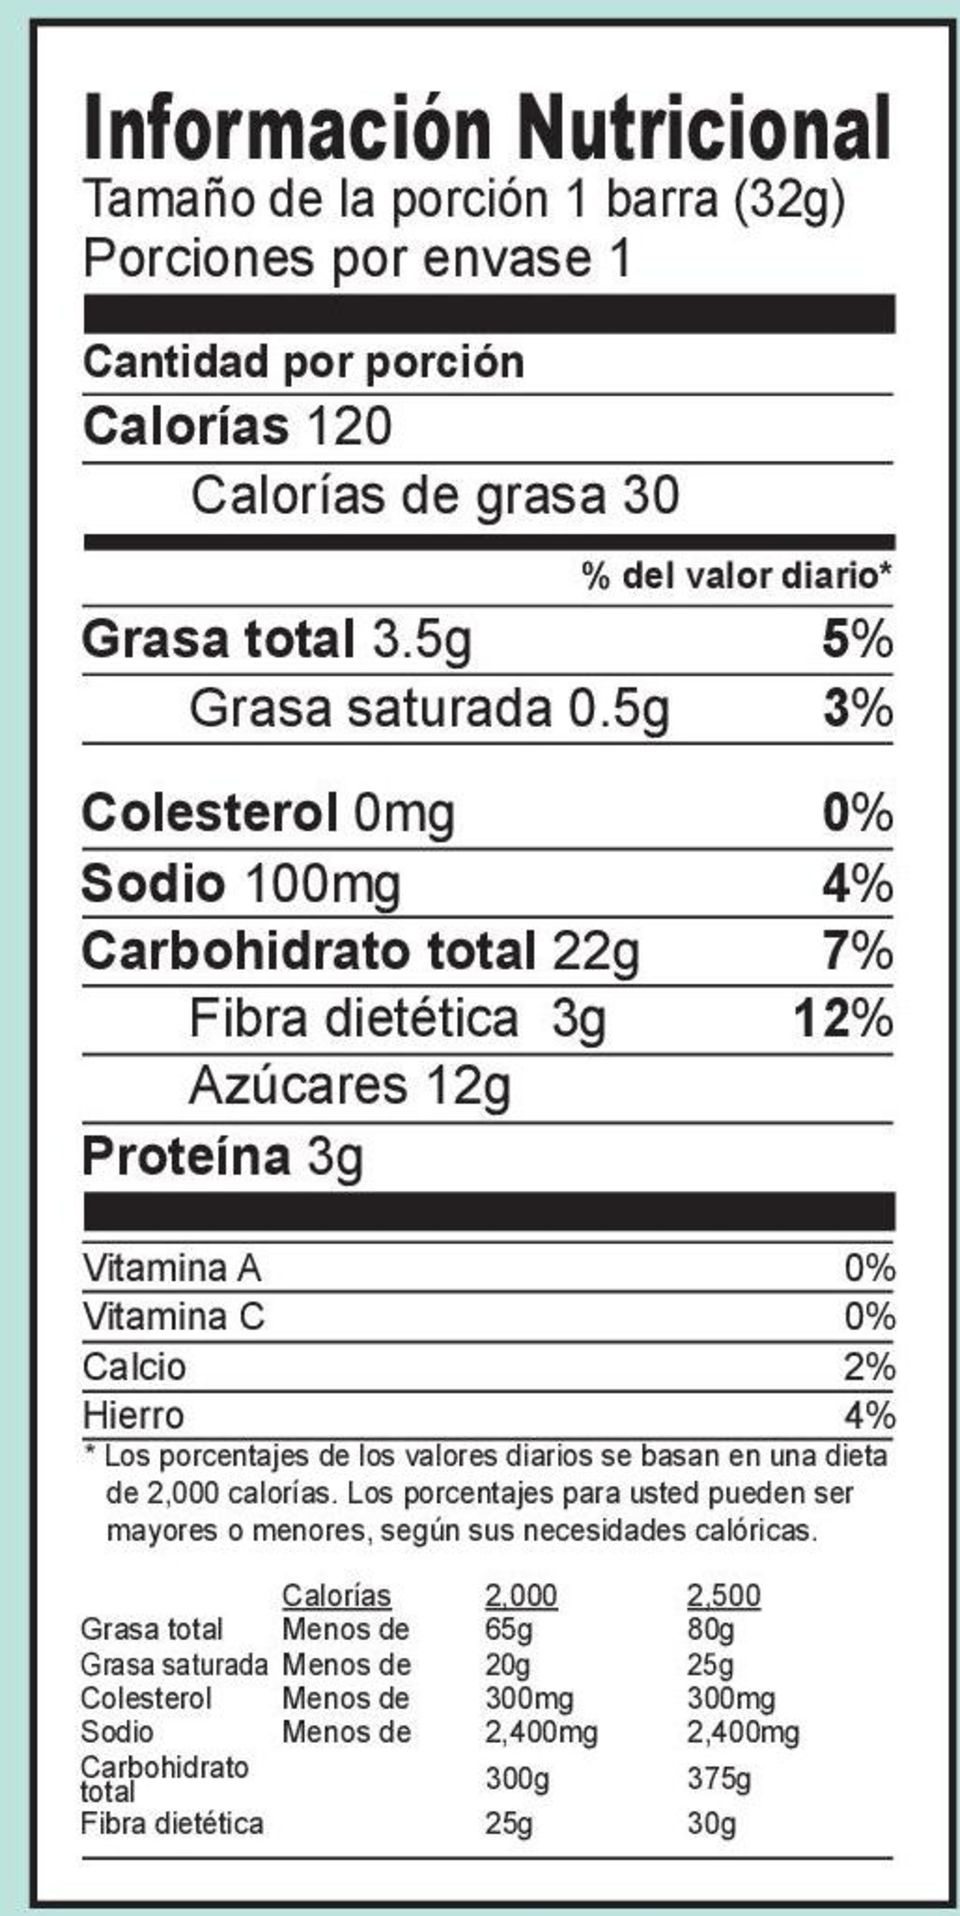 5g 3% Colesterol 0mg 0% Sodio 100mg 4% Carbohidrato total 22g 7% Fibra dietética 3g 12% Azúcares 12g Proteína 3g Vitamina A 0% Vitamina C 0% Calcio 2% Hierro 4% * Los porcentajes